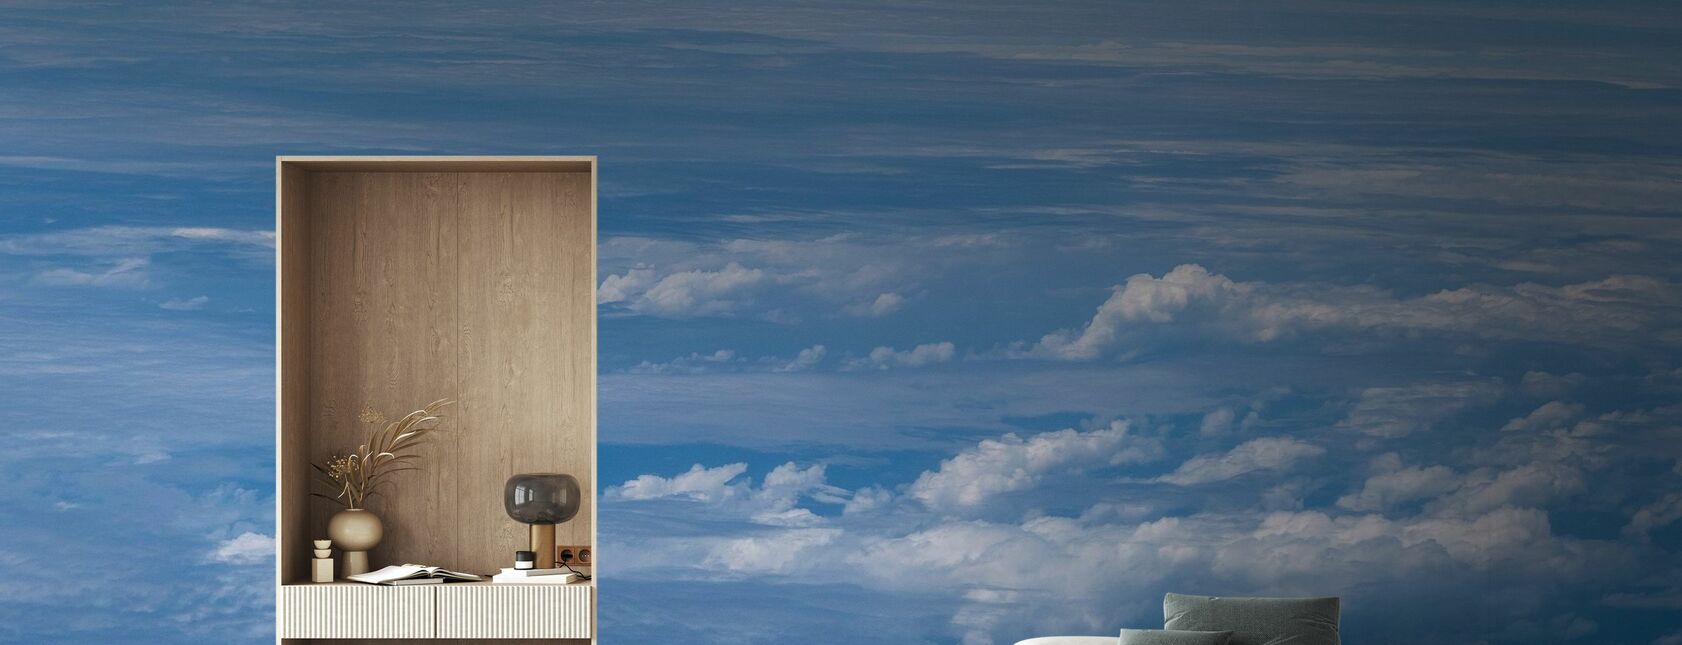 Blue Cloudy Sky - Wallpaper - Living Room